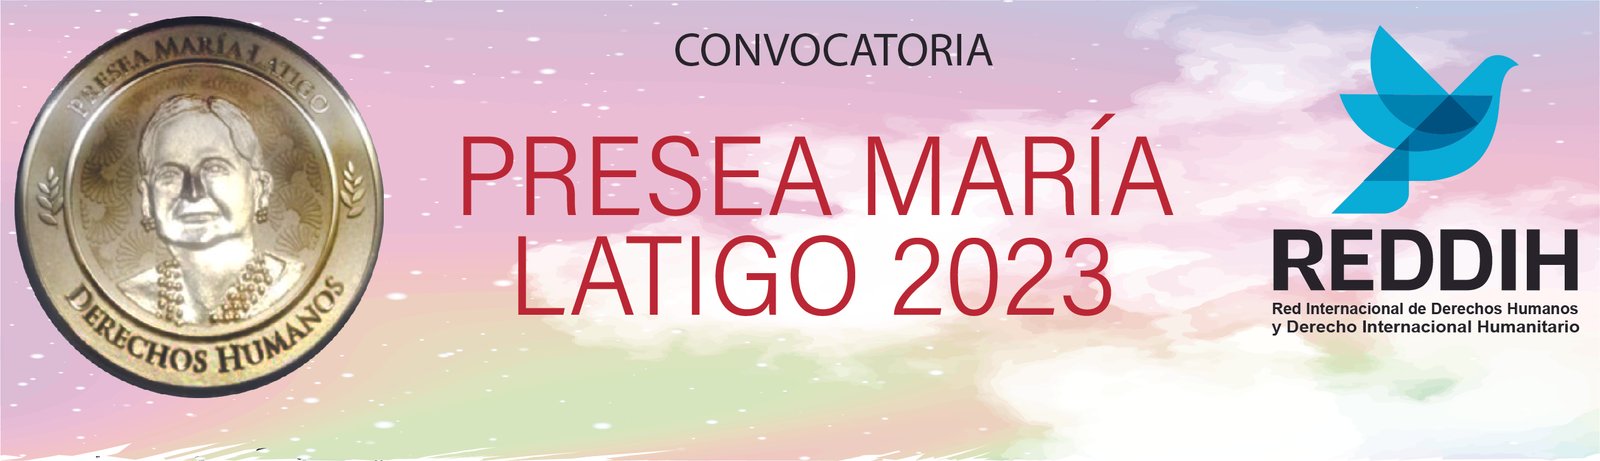 Convocatoria Presea María Latigo 2023